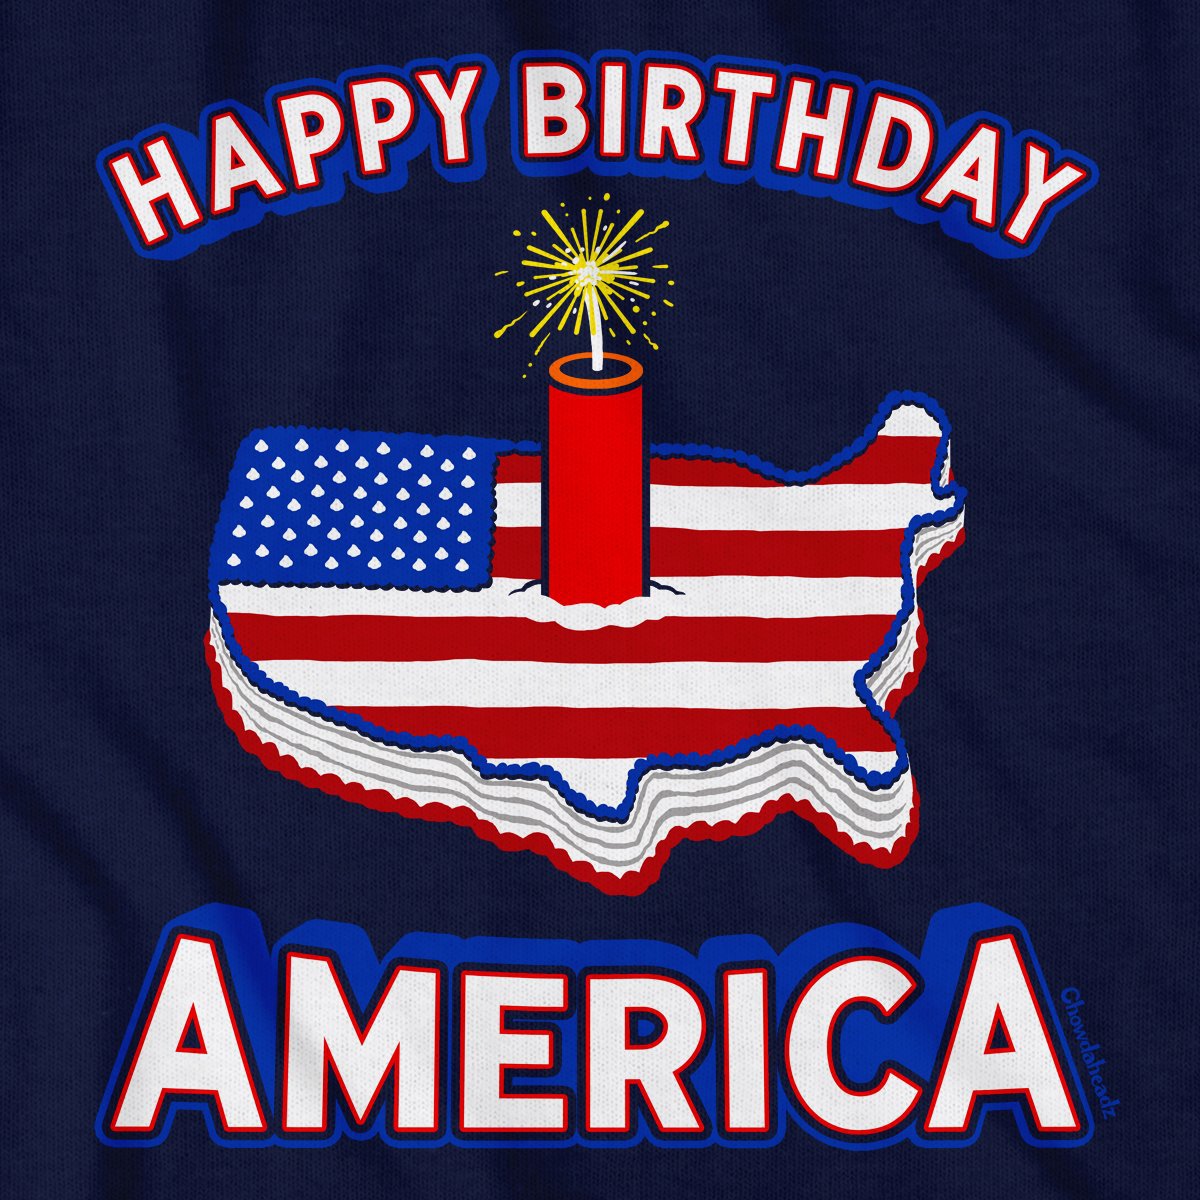 Happy Birthday America T-Shirt - Chowdaheadz